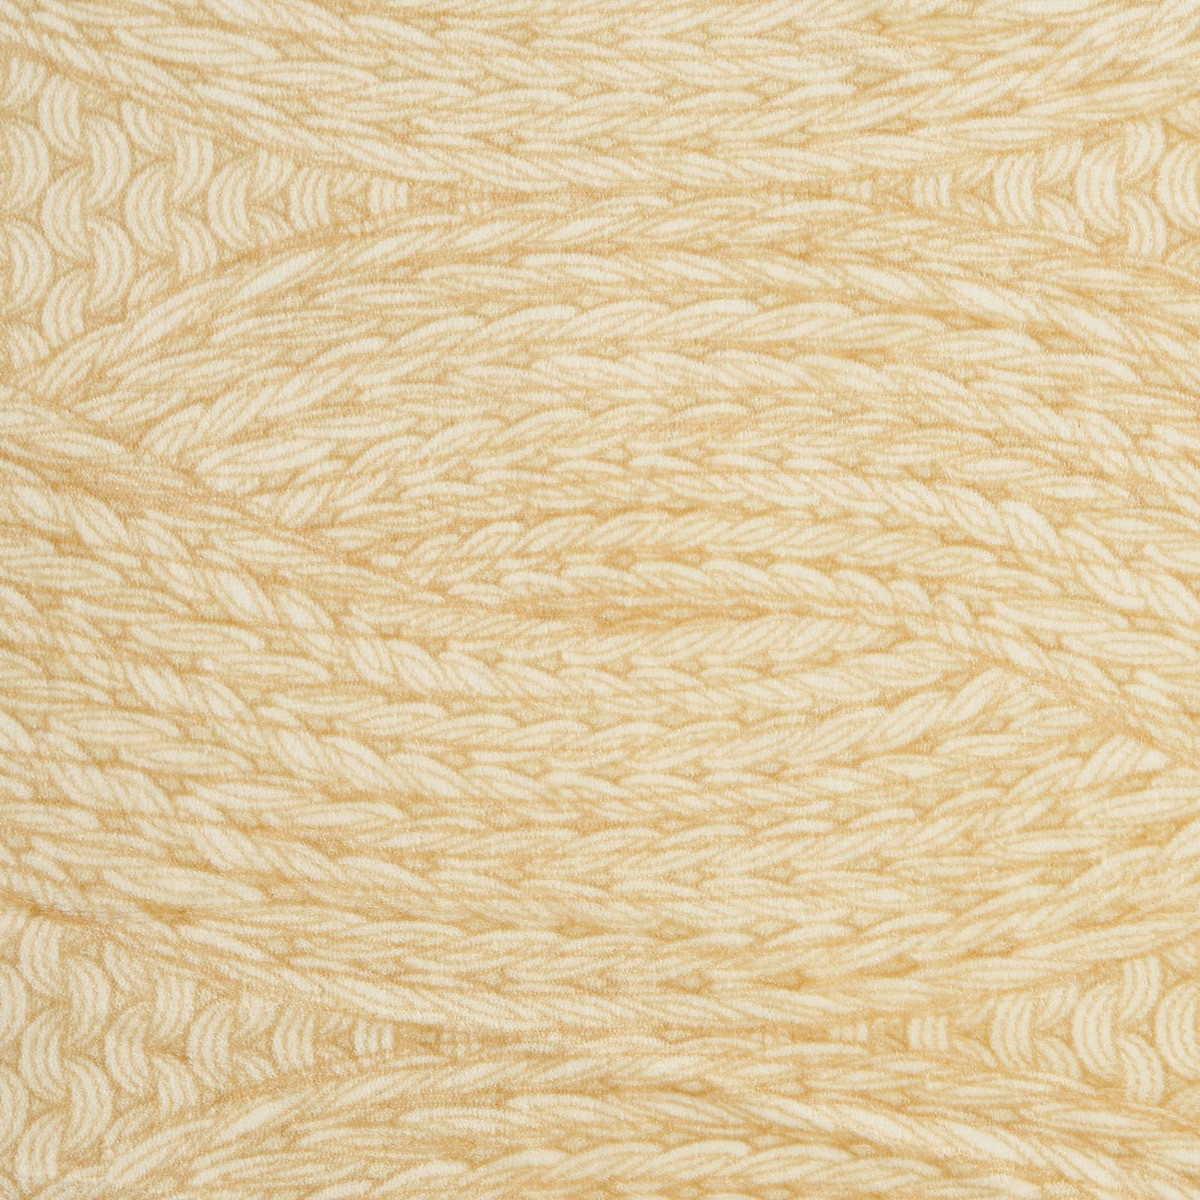 Dreamscene Chunky Knit Sherpa Throw, Cream - 150 x 180cm>